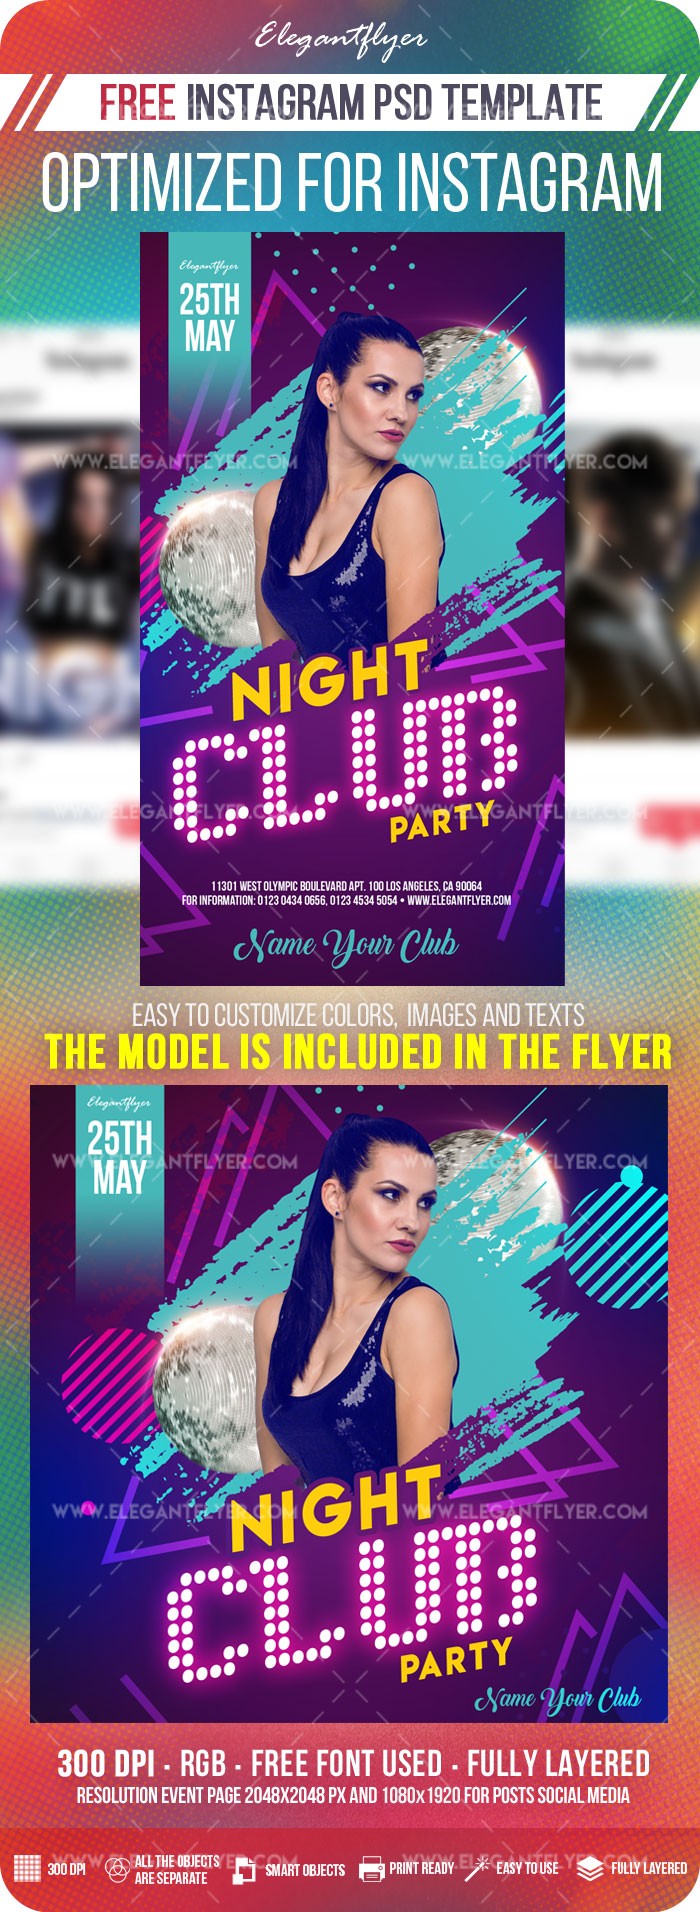 Nachtclub Party Instagram by ElegantFlyer